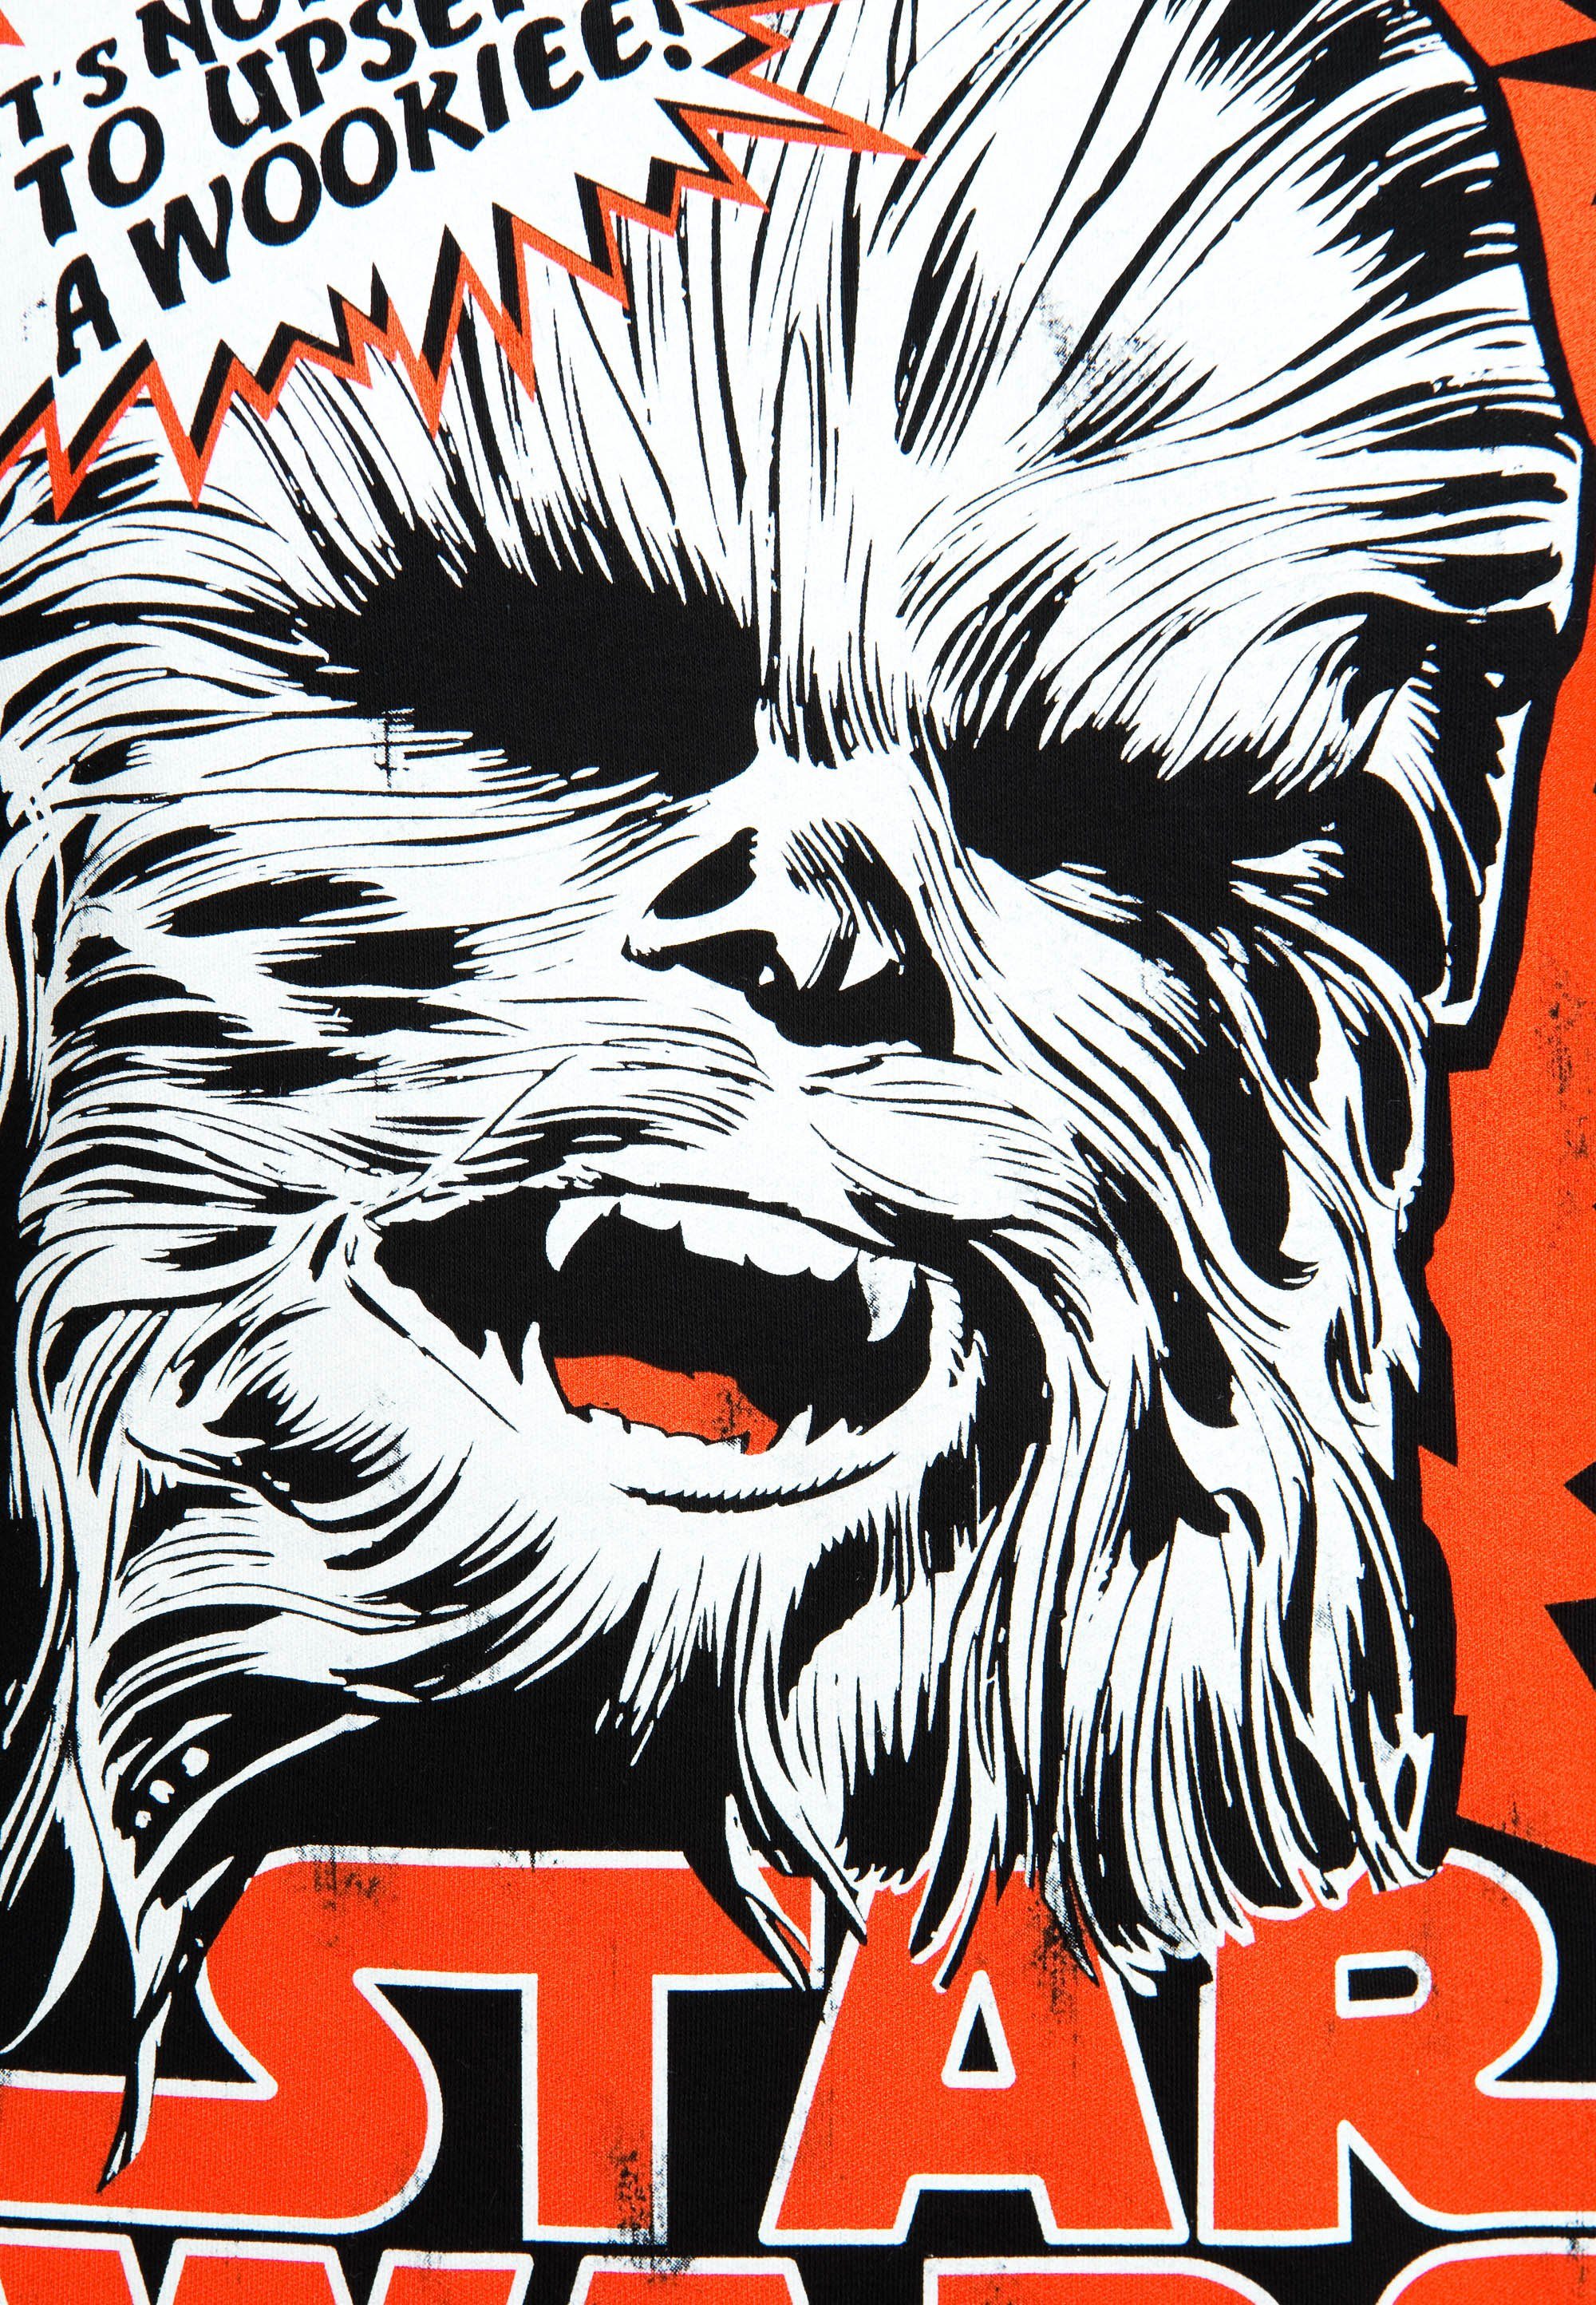 coolem Wookie-Print mit LOGOSHIRT T-Shirt Chewbacca